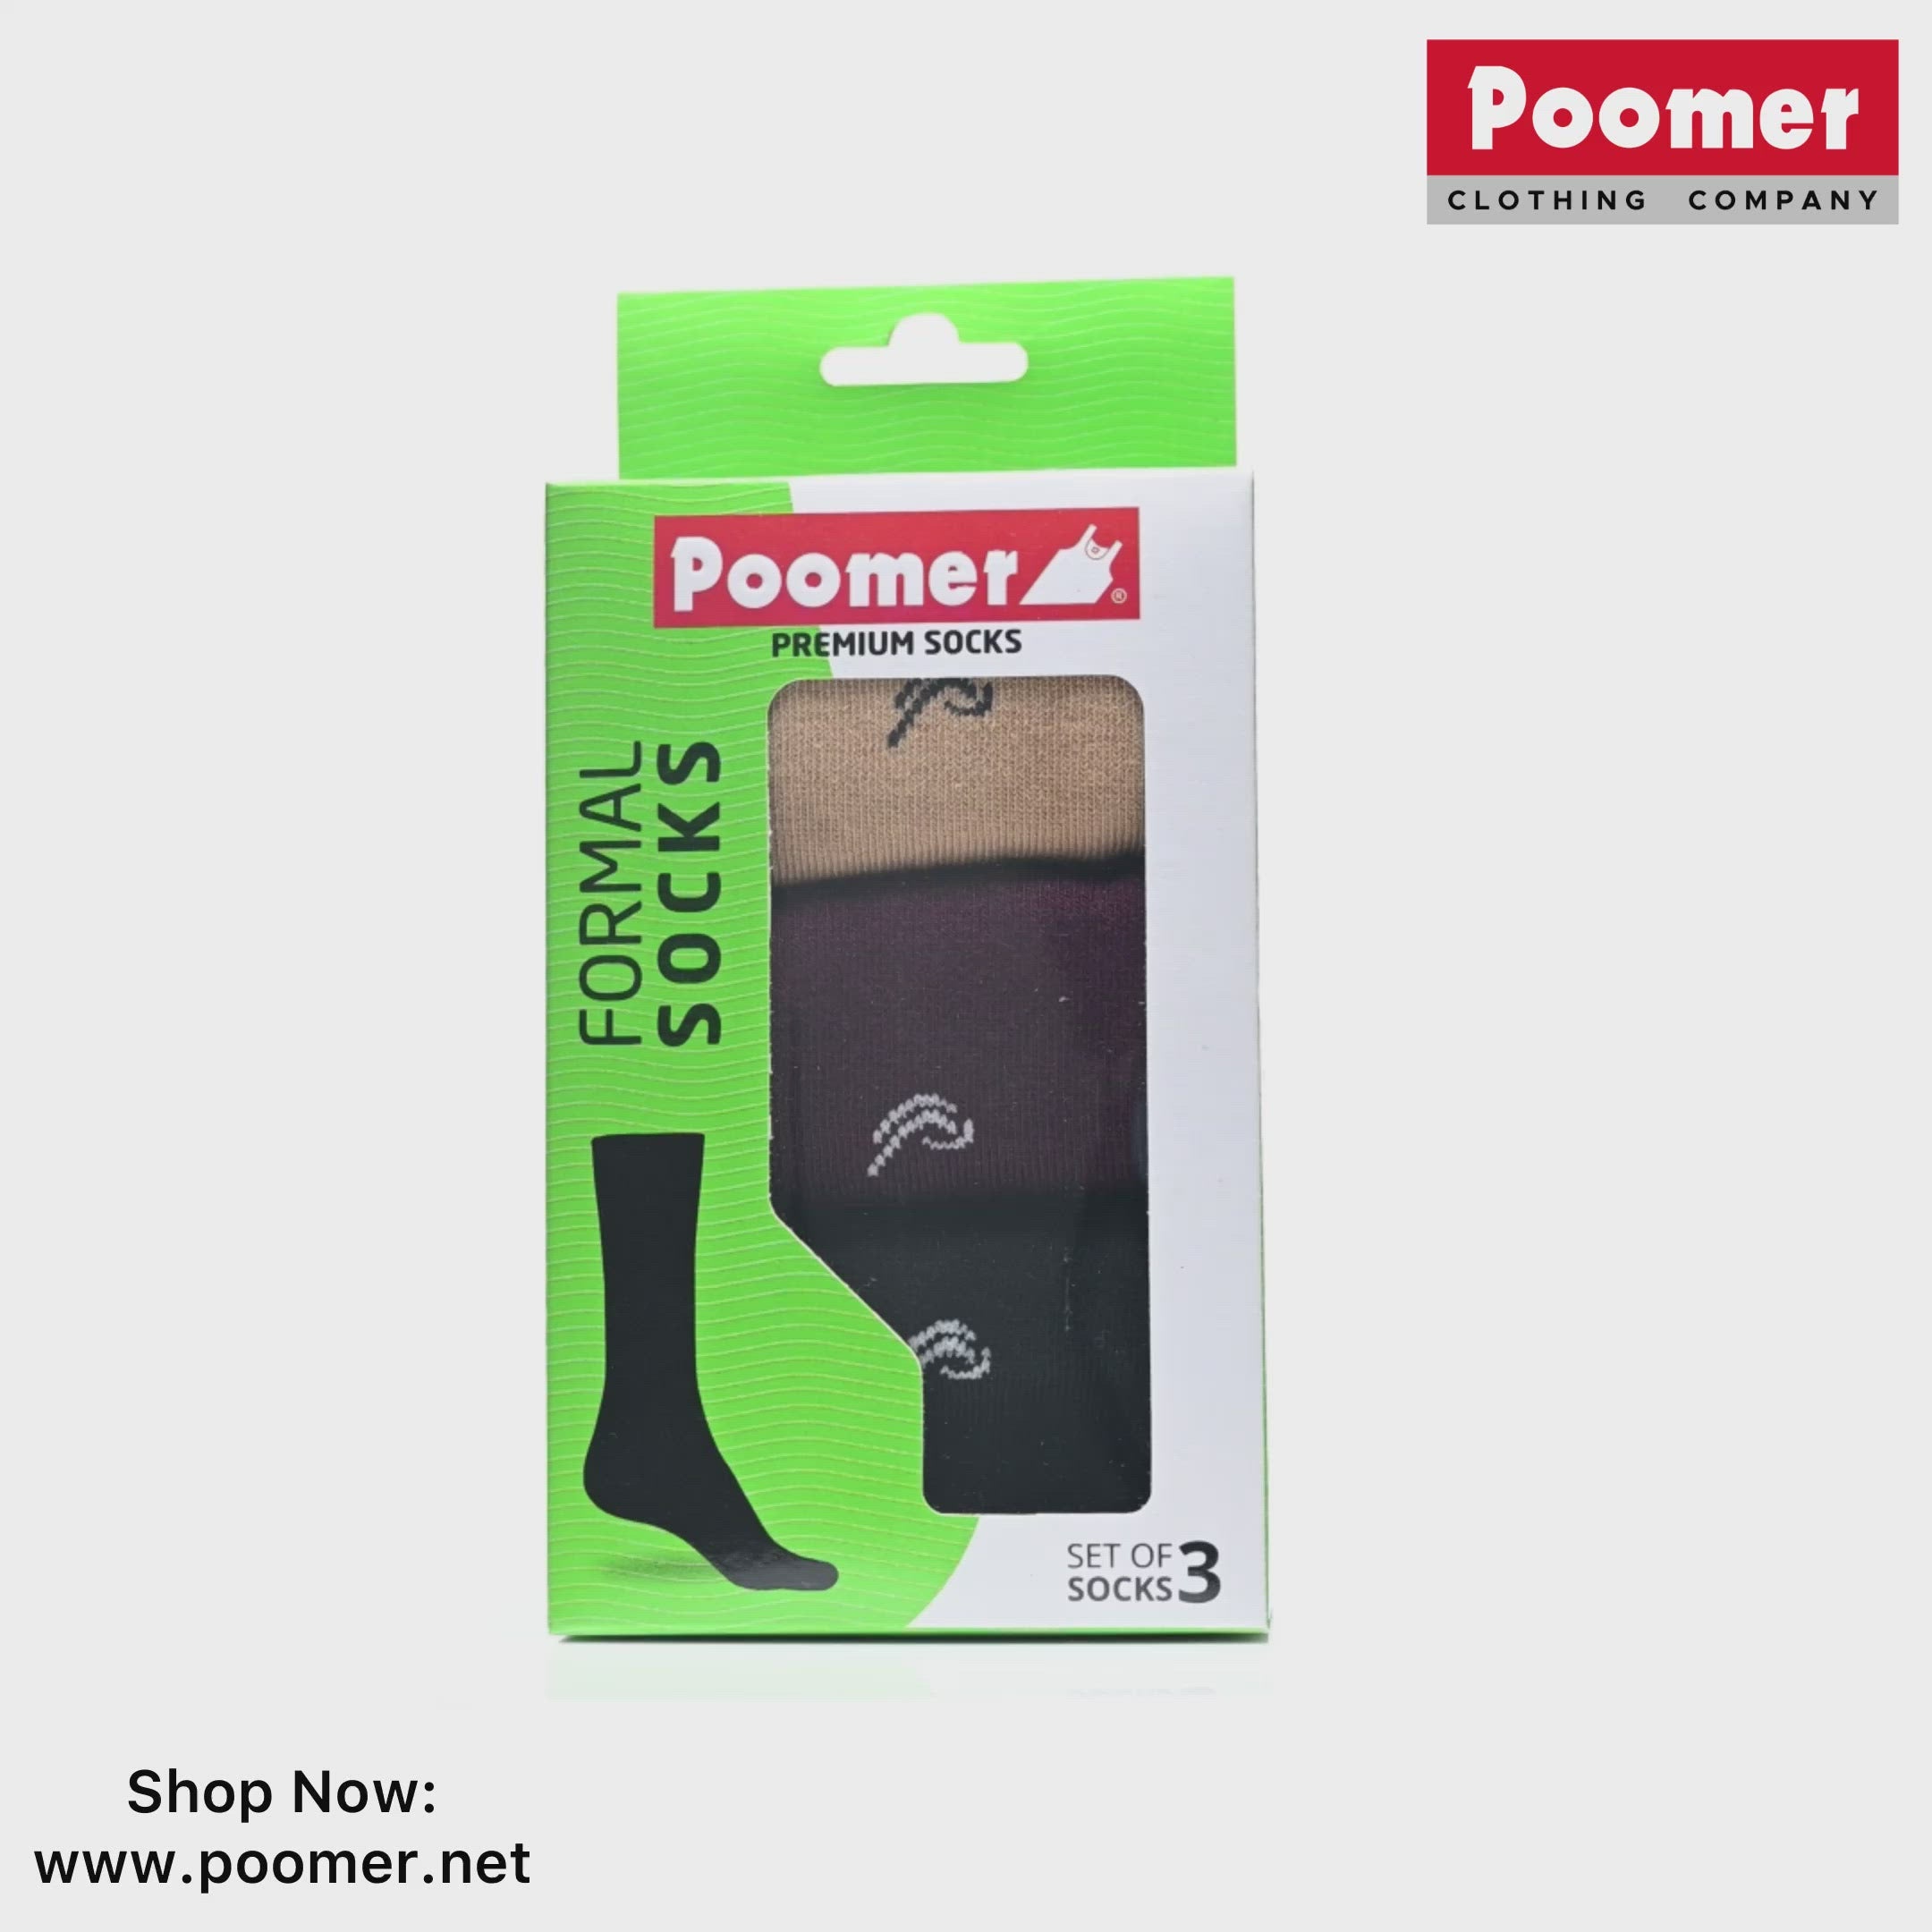 Poomer Formal full length Socks - Premium (Set of 3 pairs)